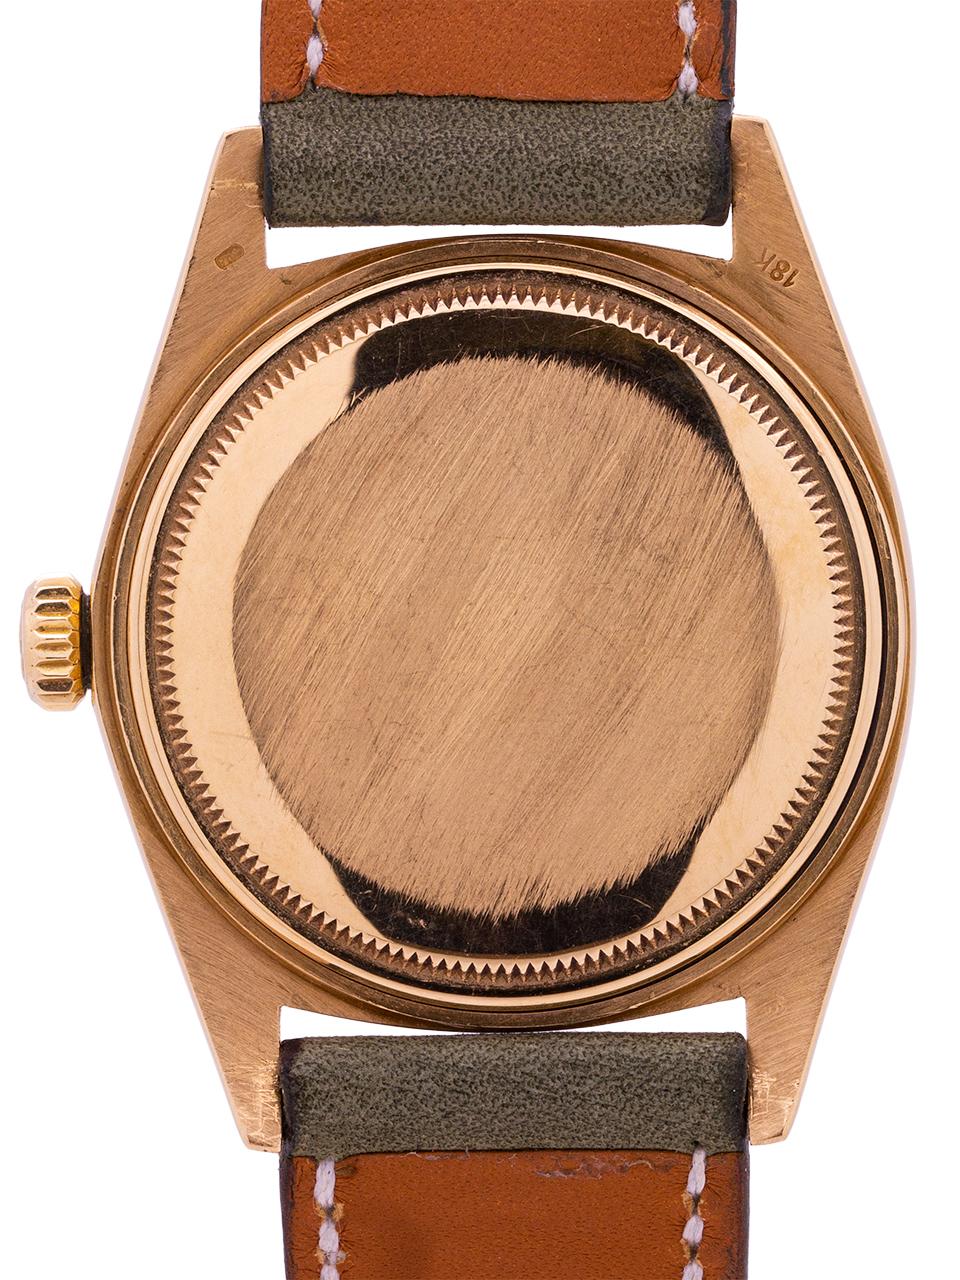 Men's Rolex Yellow Gold Datejust self winding Wristwatch Ref 1601, c 1972